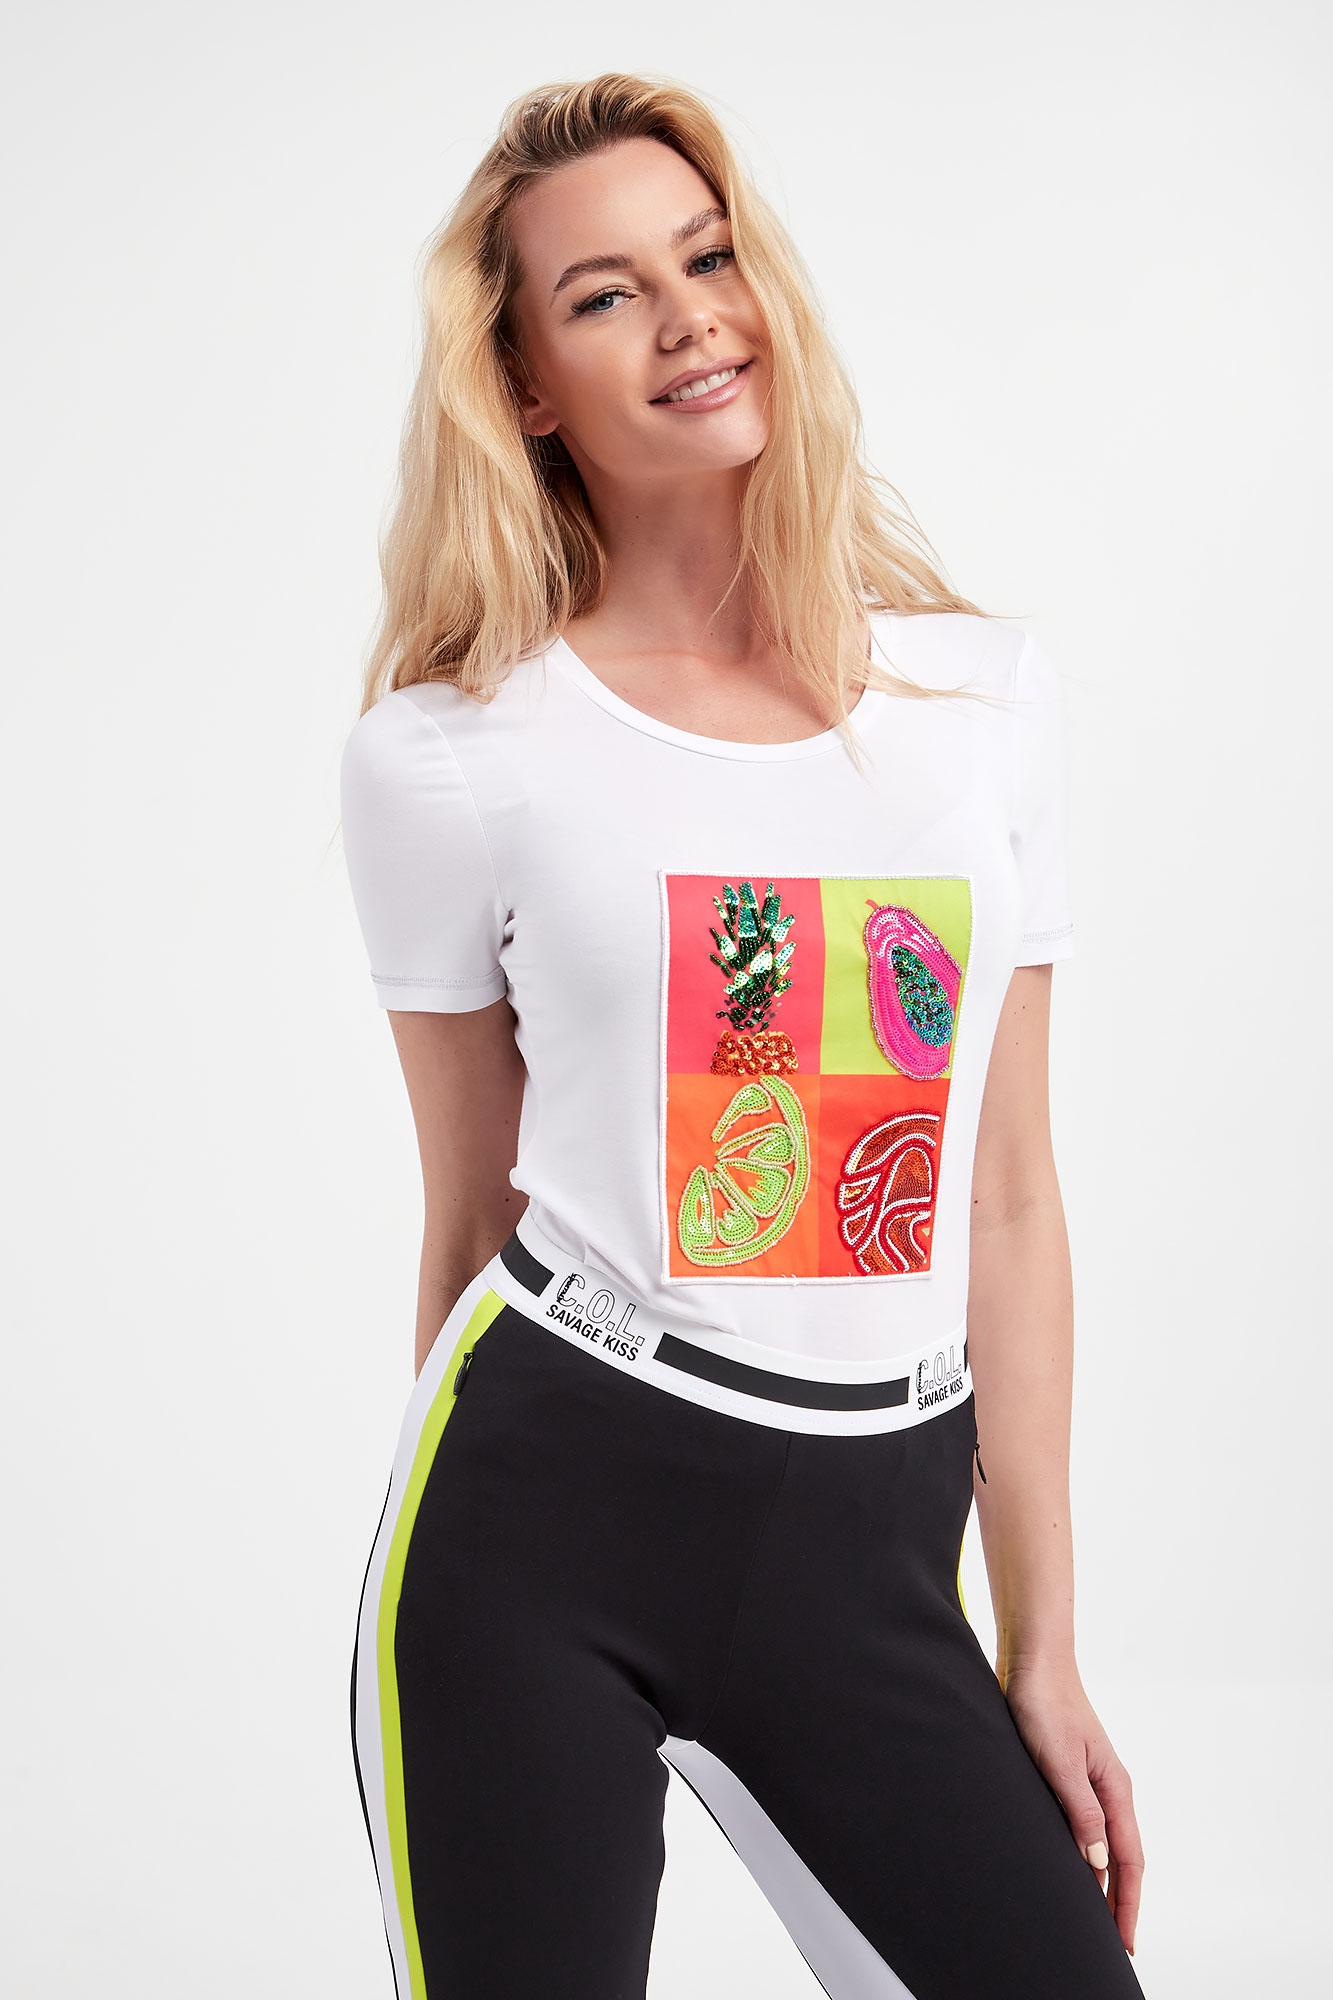 T-shirt Leesha SPORTALM rozmiar 42 (roz. polski 38) – 64668-180